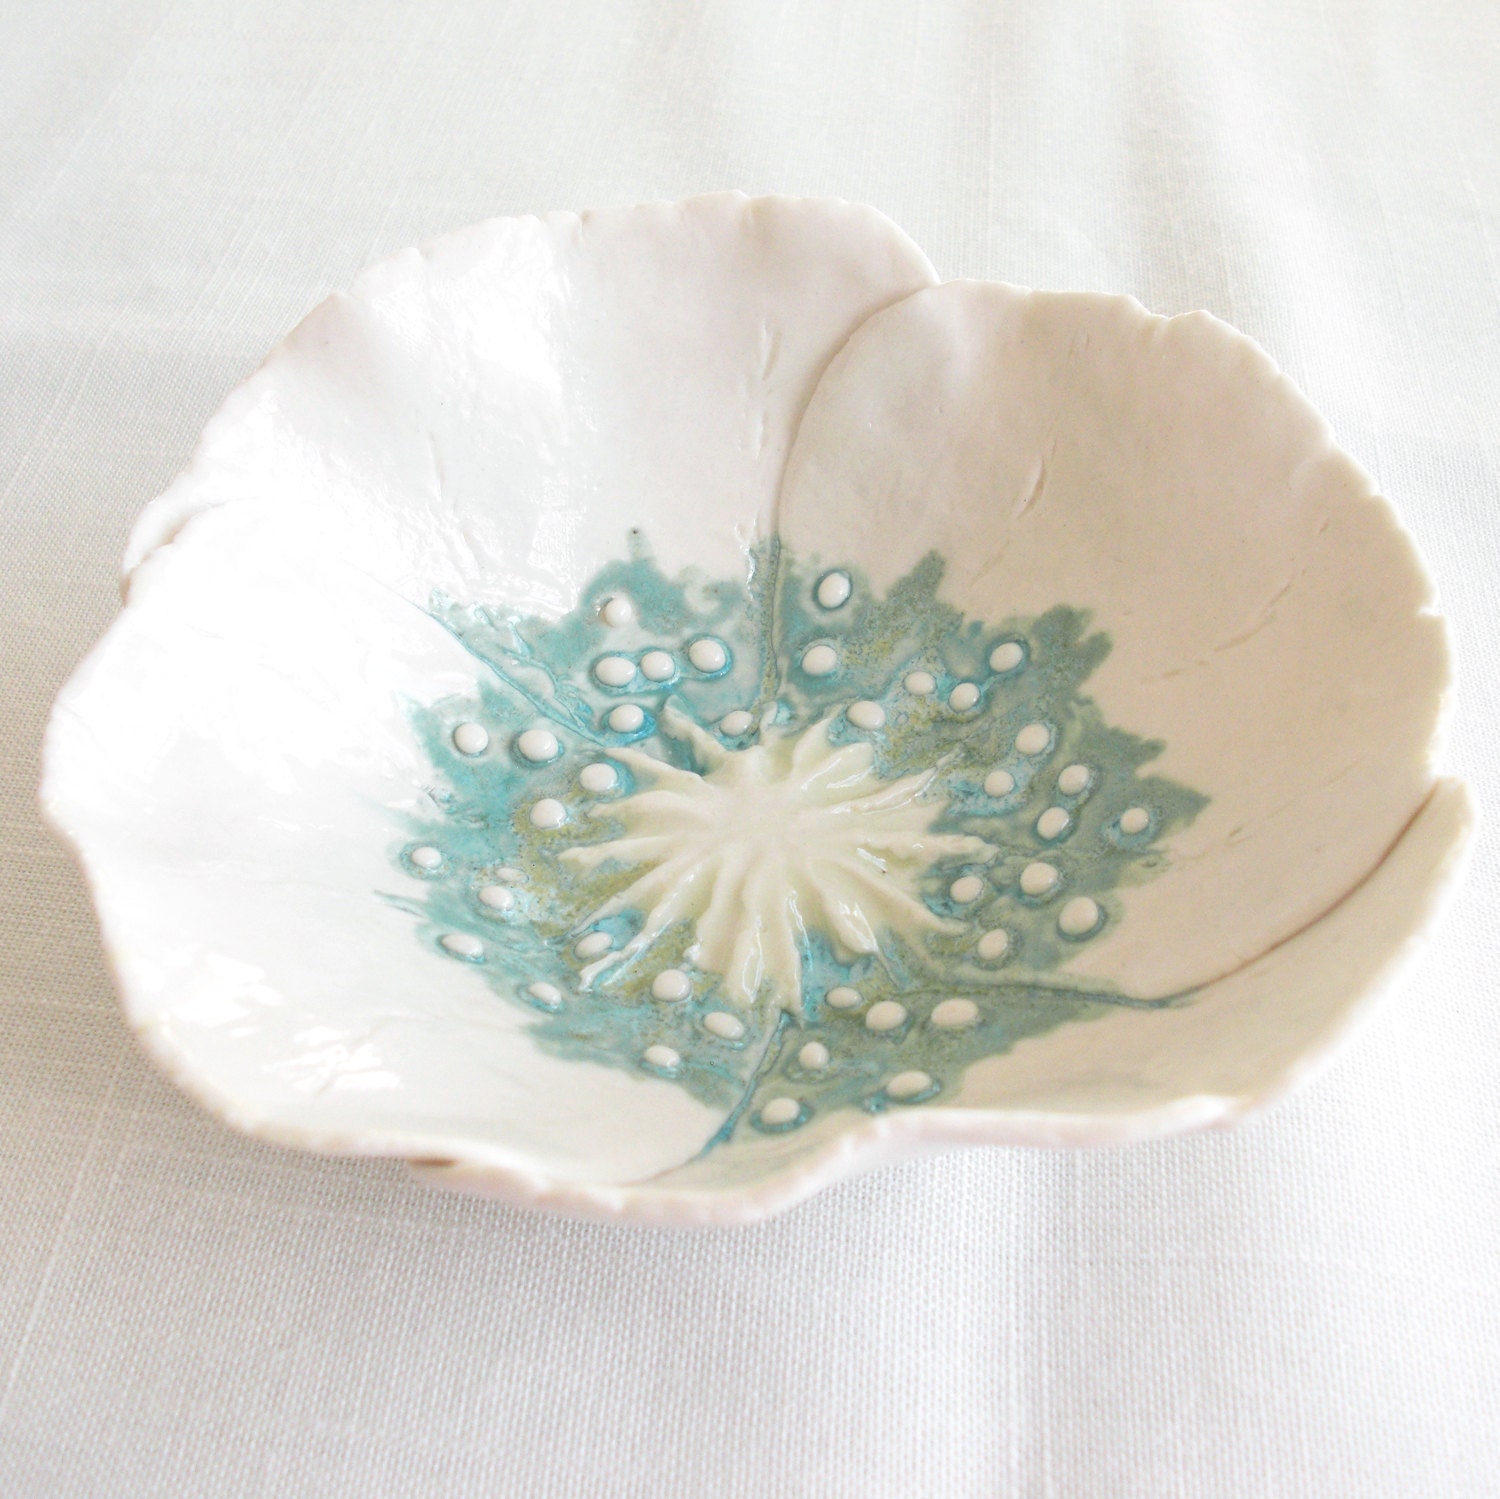 Handmade to order white porcelain poppy bowl with aqua and lime ceramic glazes - VanillaKiln